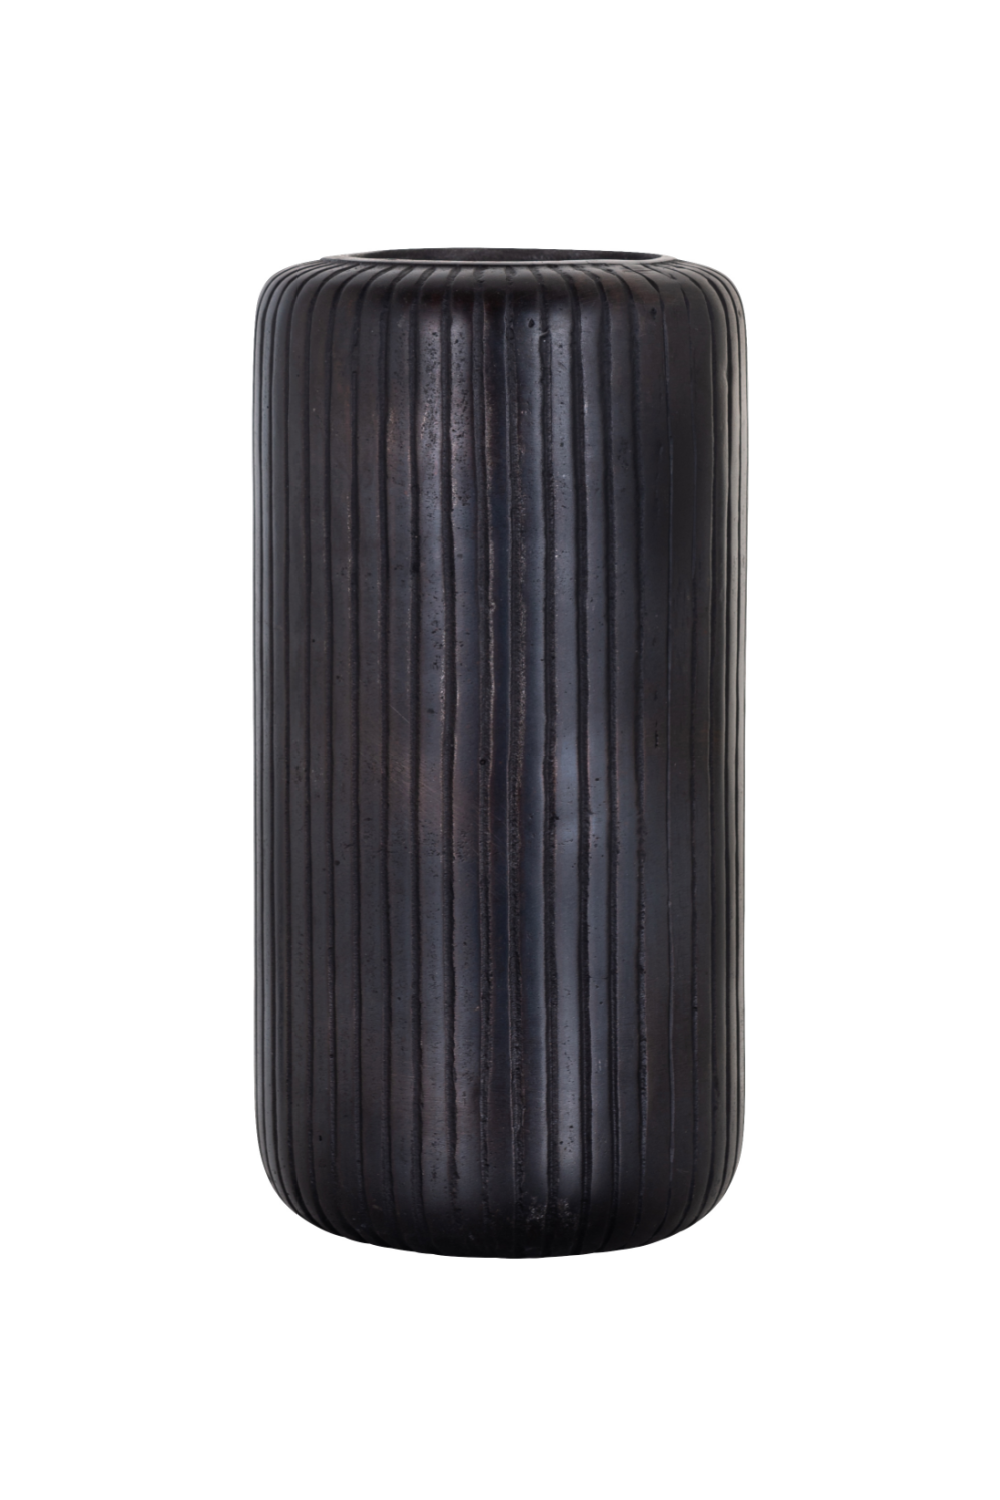 Cylindrical Black Vase | OROA Remzi | OROA.com